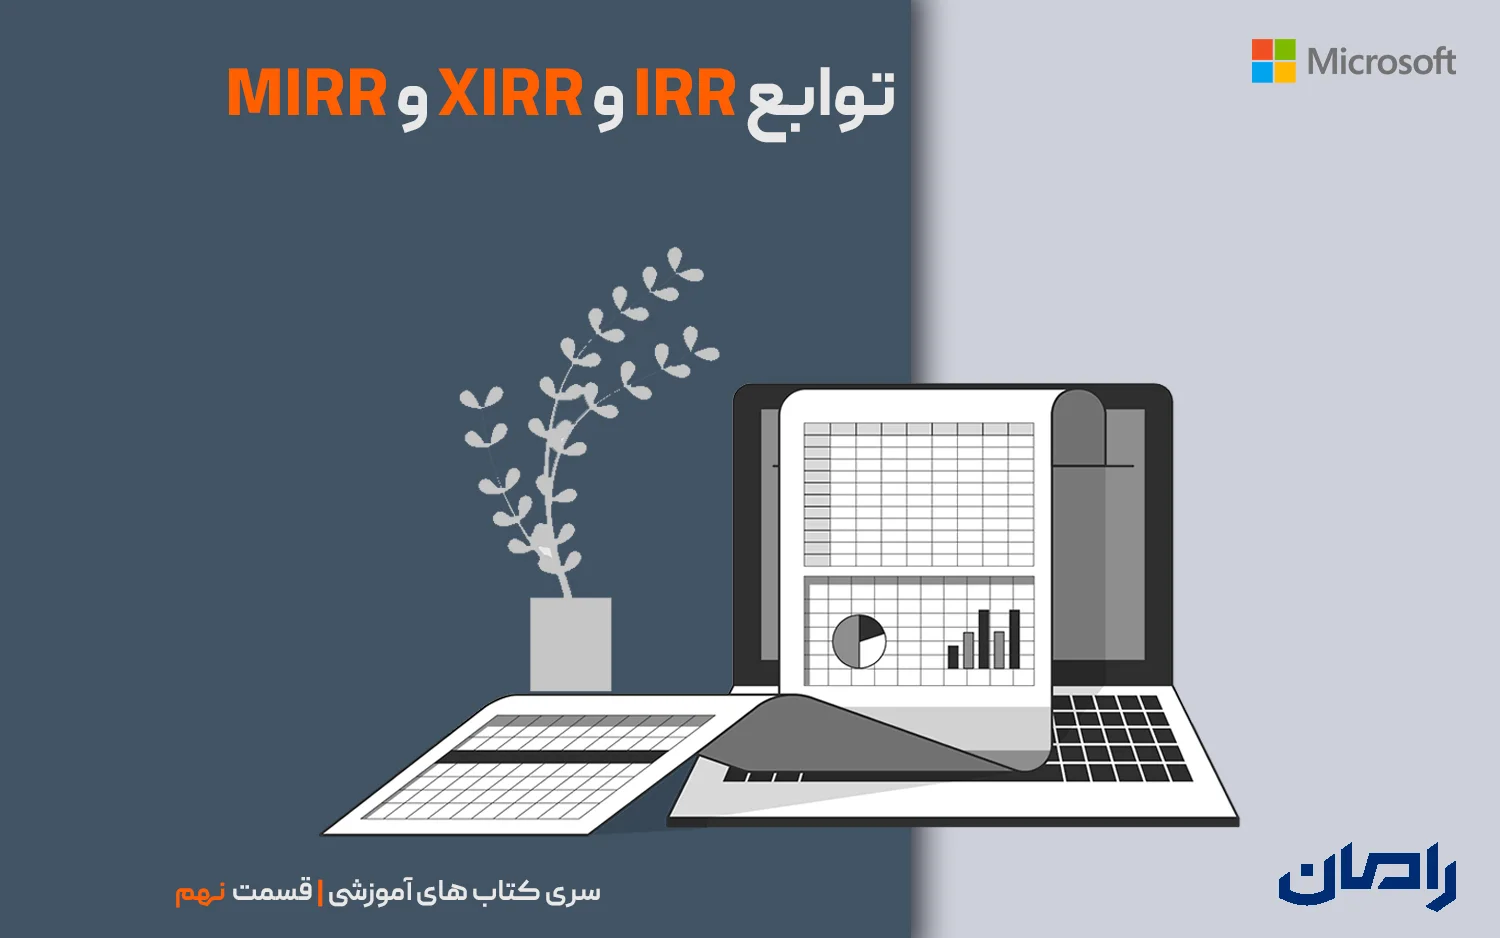 توابع XIRR, IRR و MIRR